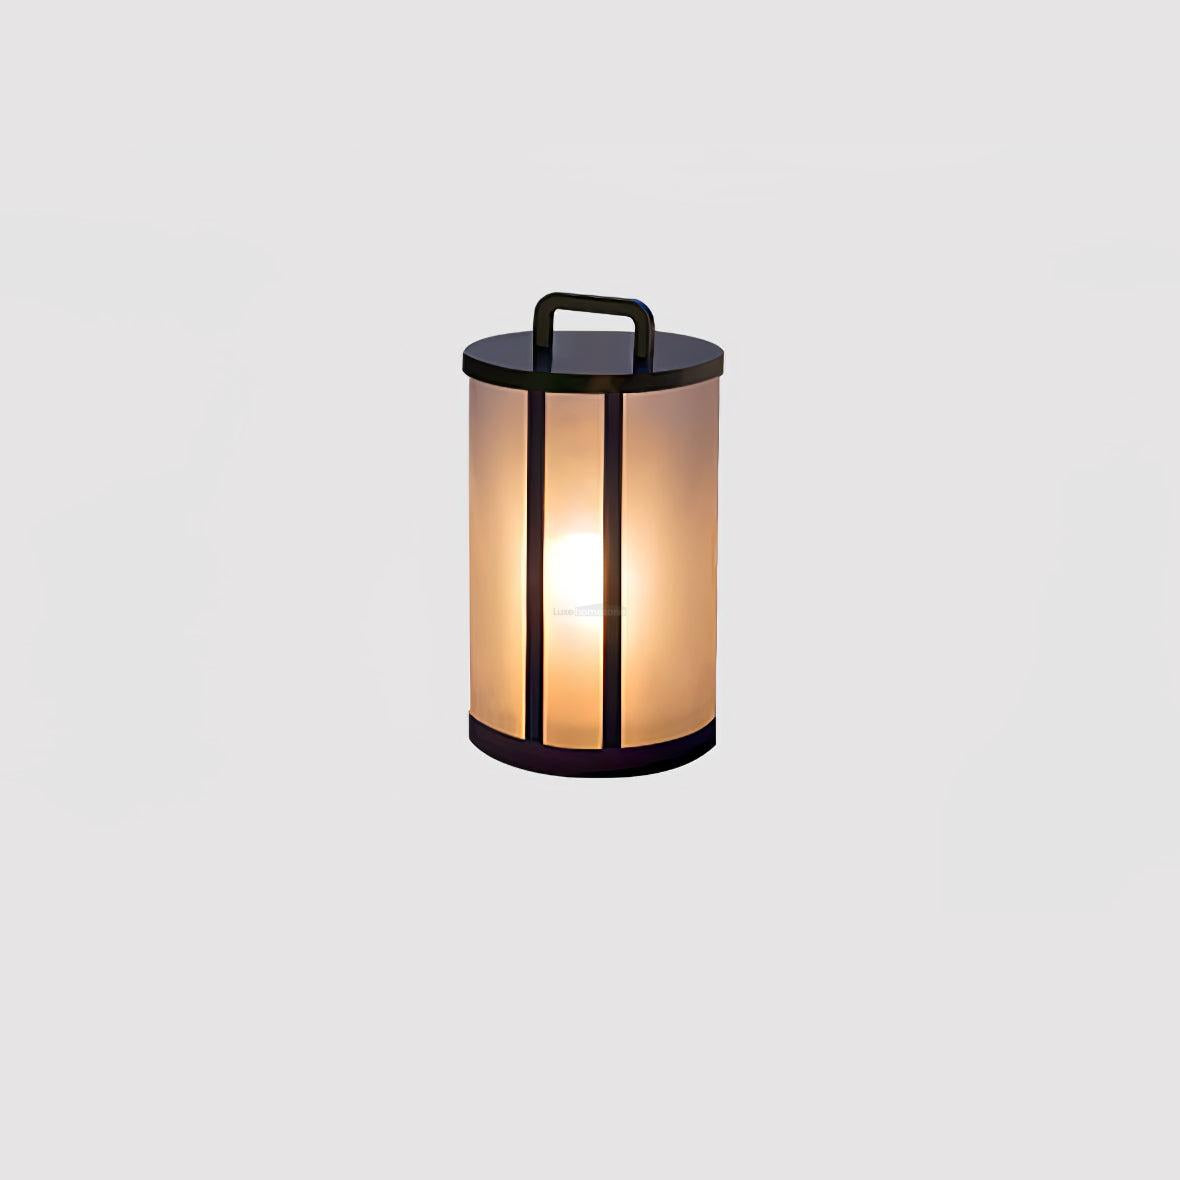 Round Pillar Acrylic Lantern Lamp for Outdoor